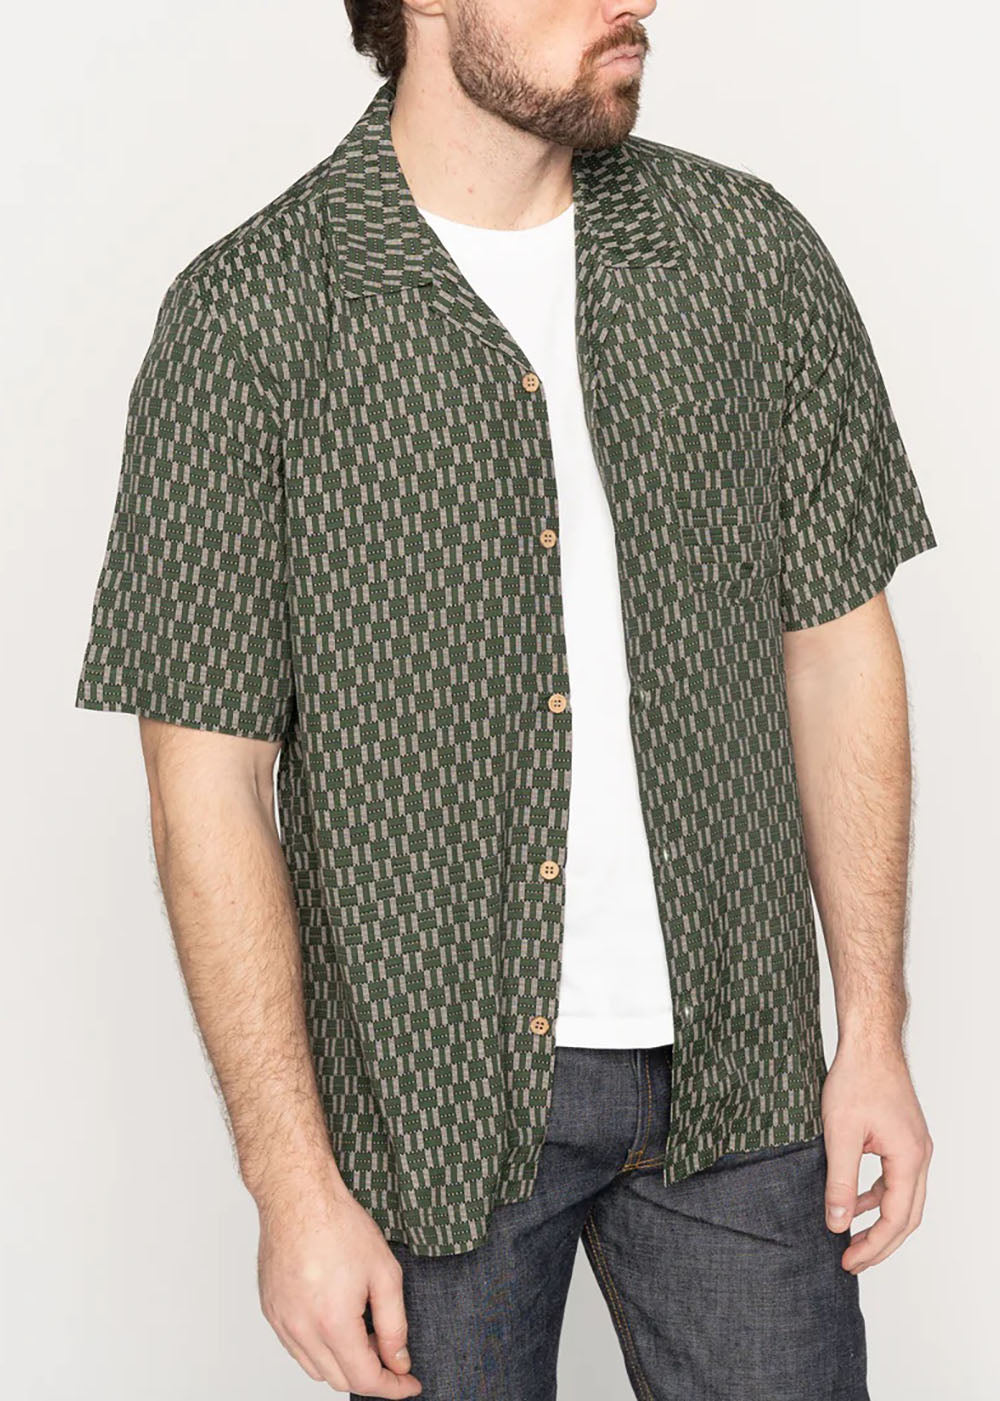 Aloha Shirt - Weave Print - Green _ Naked and Famous Denim - Canada - Danali - 120231331